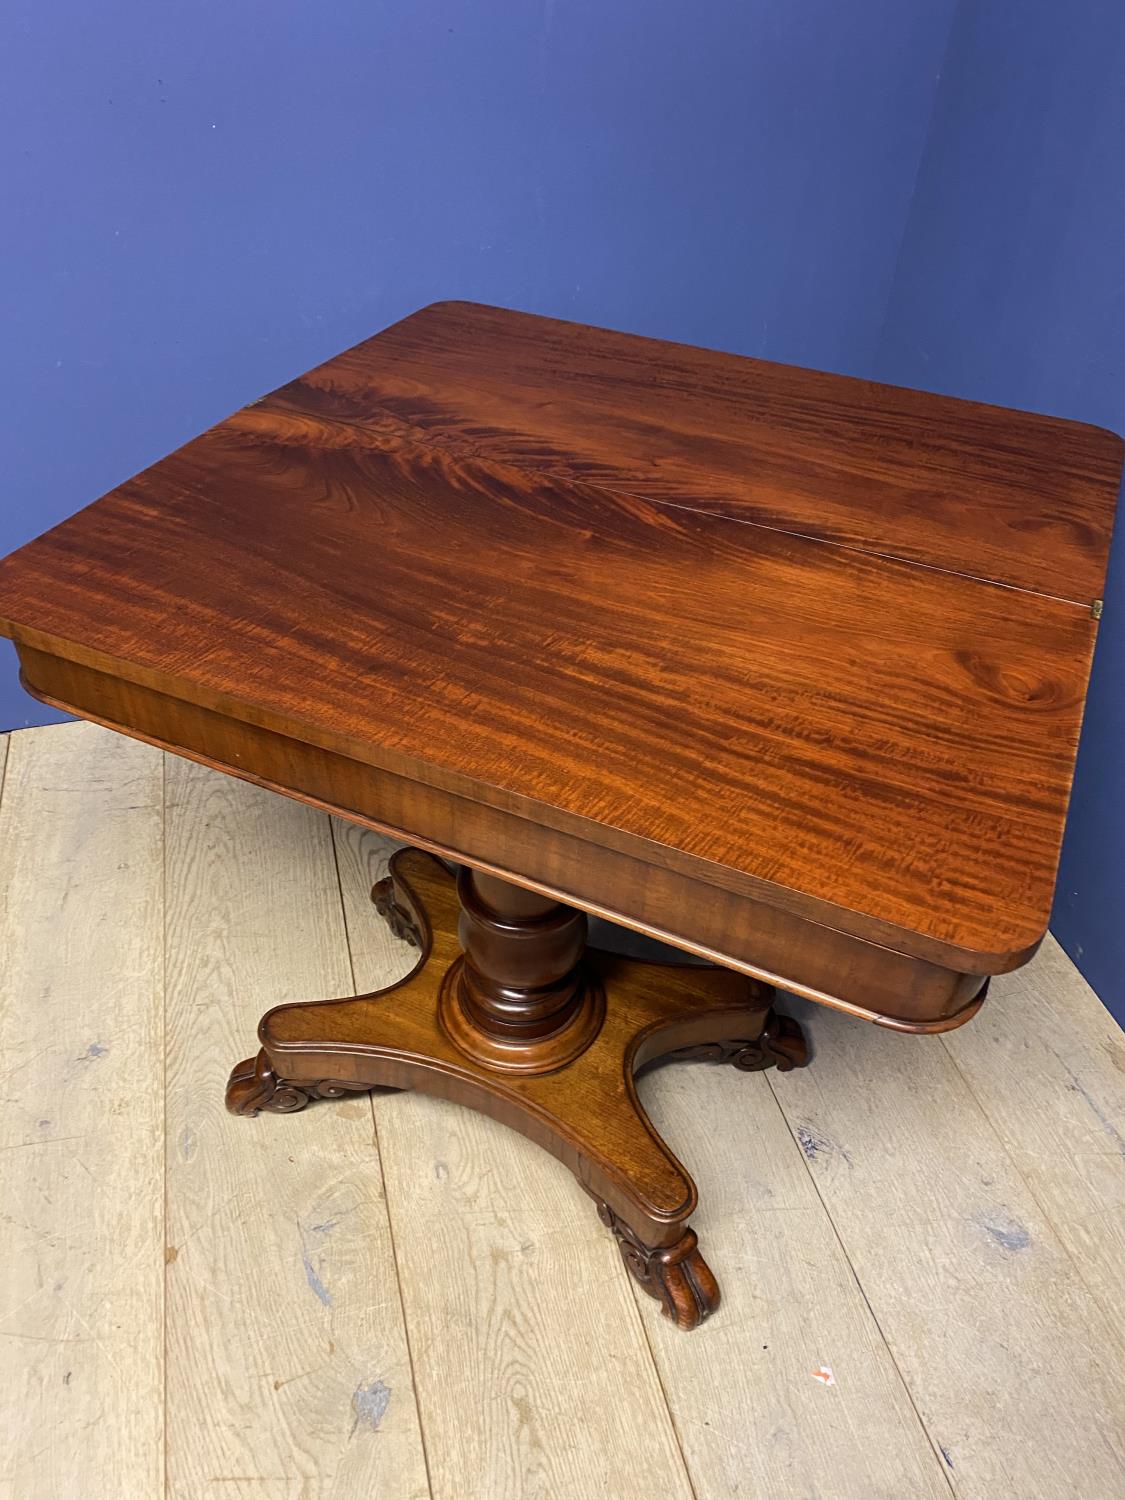 Early Victorian pedestal foldover mahogany tea table 92cmL - Image 4 of 4